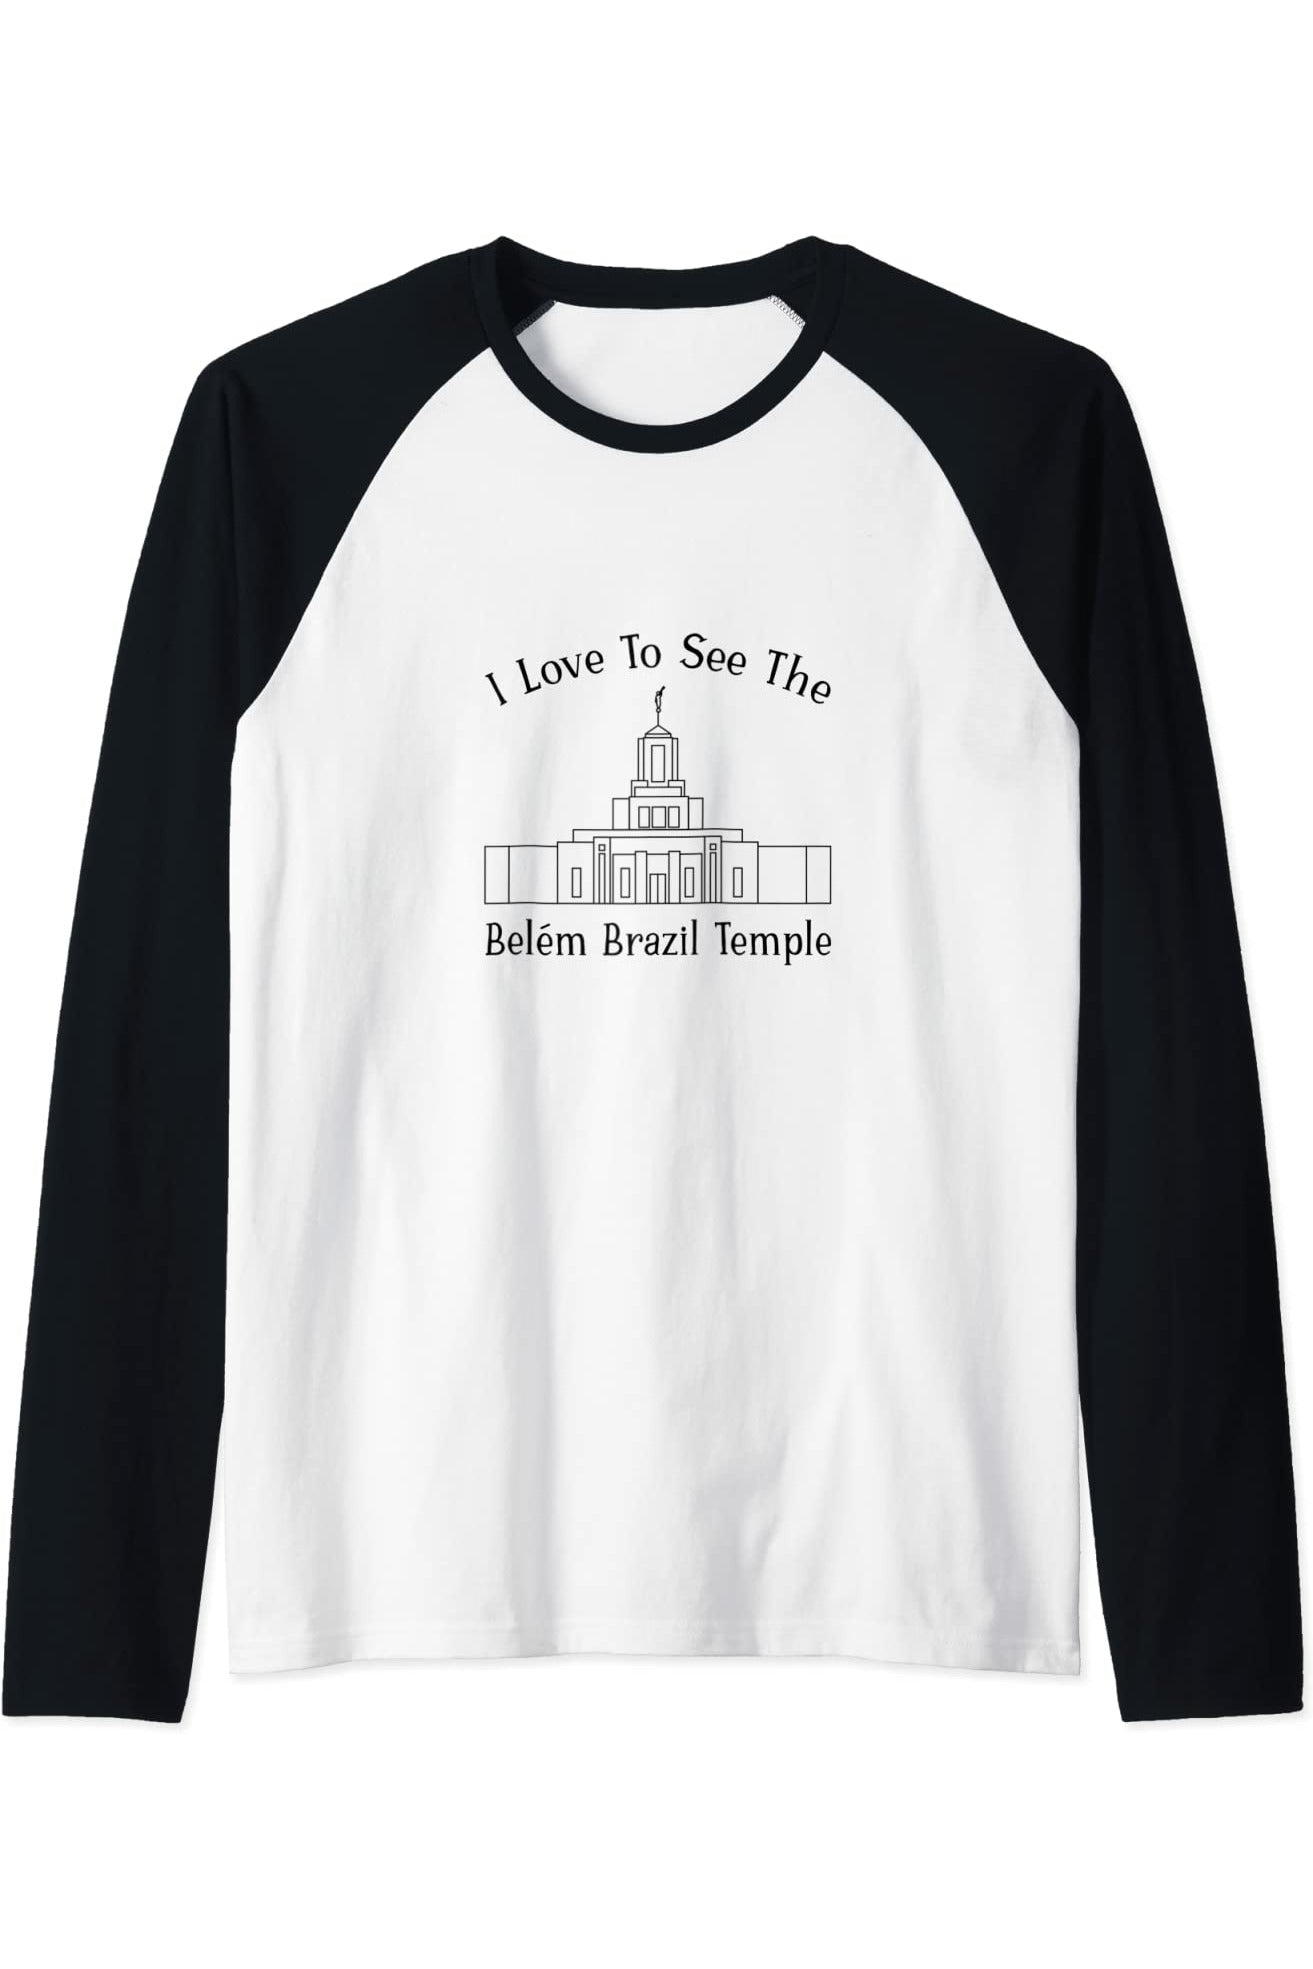 Belem Brazil Temple Raglan - Happy Style (English) US